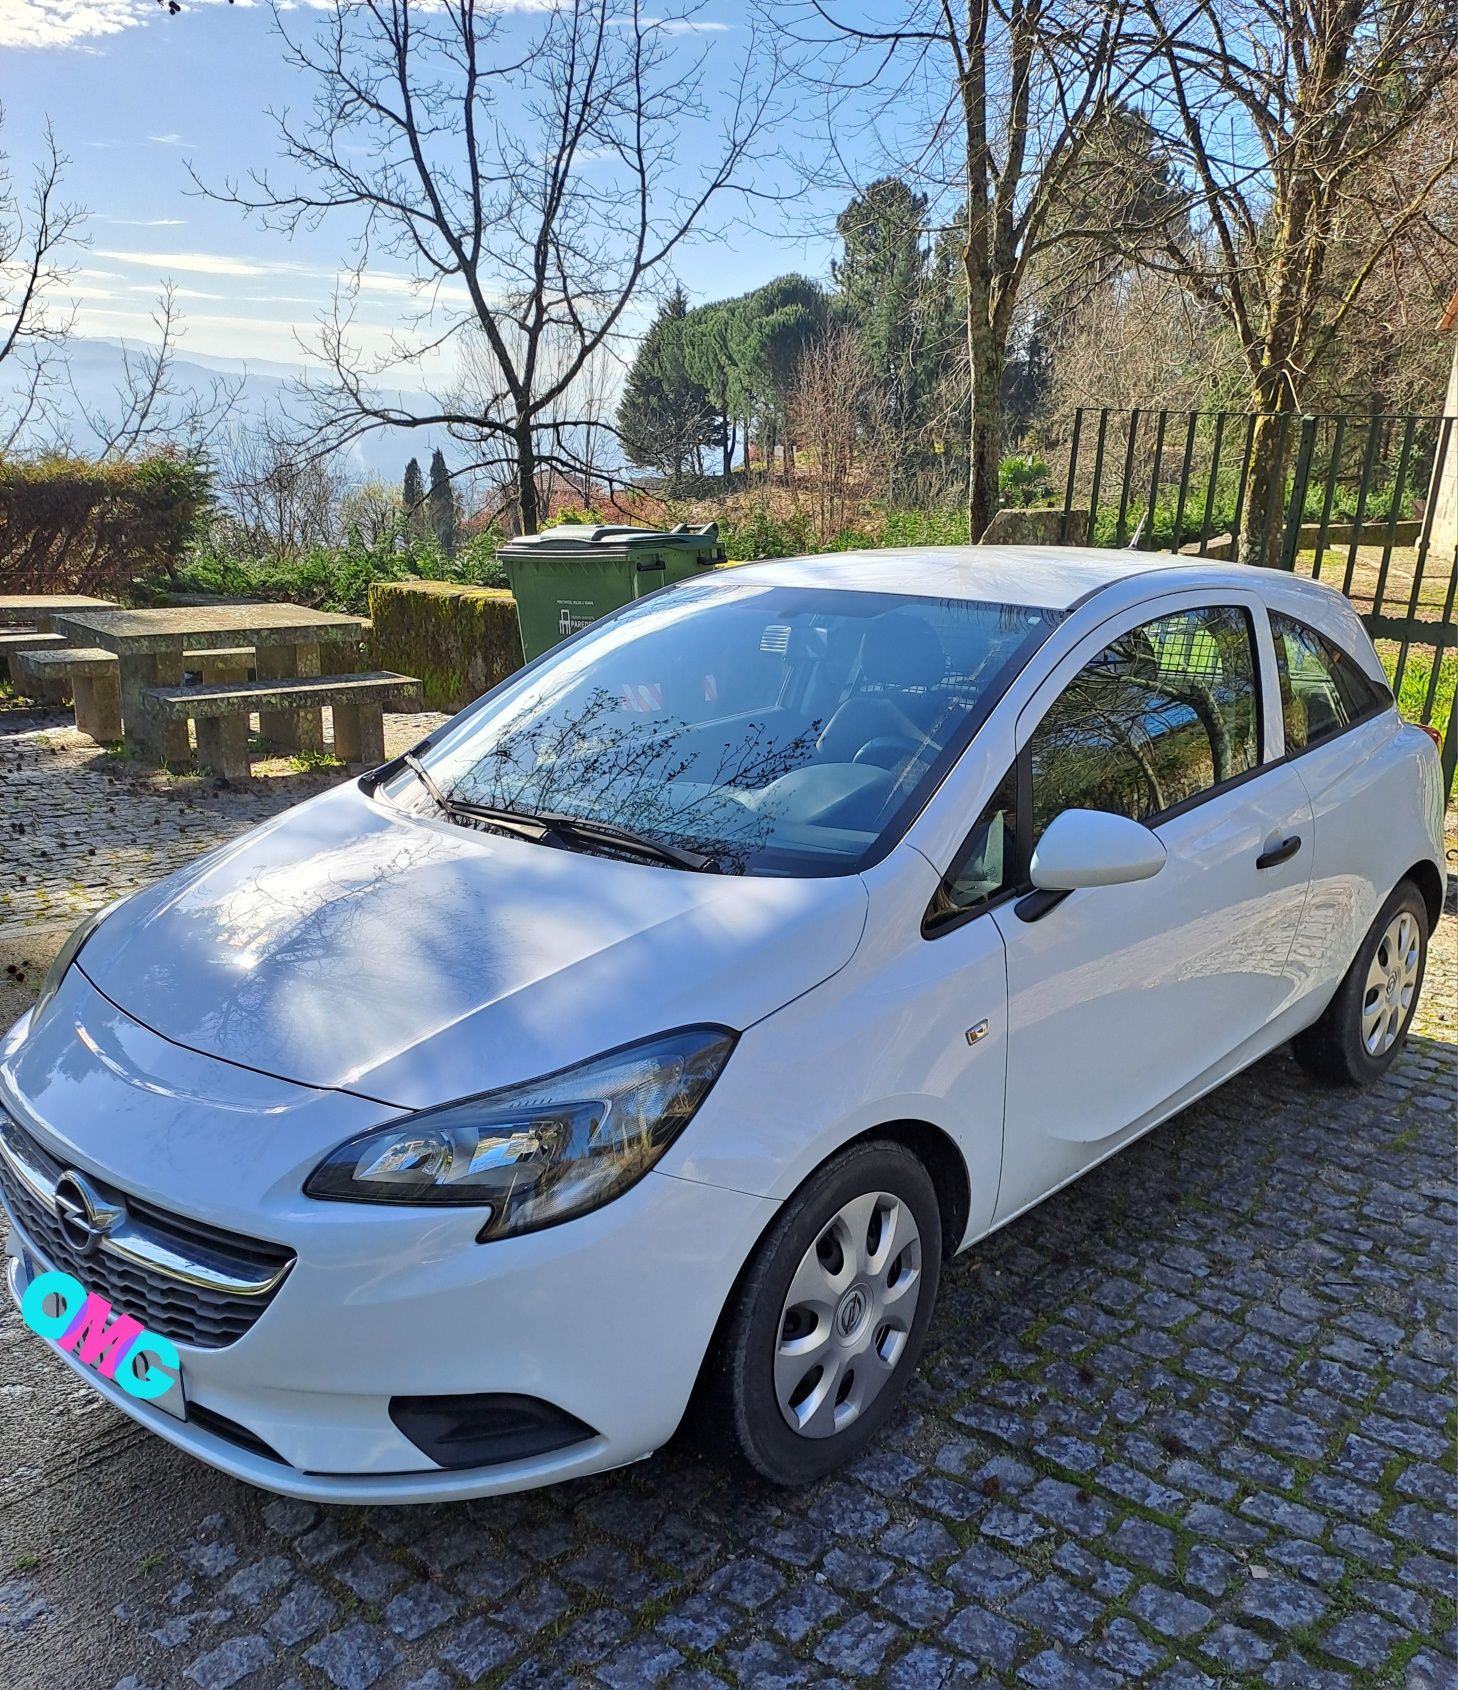 Iva dedutível Opel Corsa 1.3 cdti - 2016
OPEL CORSA 1.3cdti Van em exc